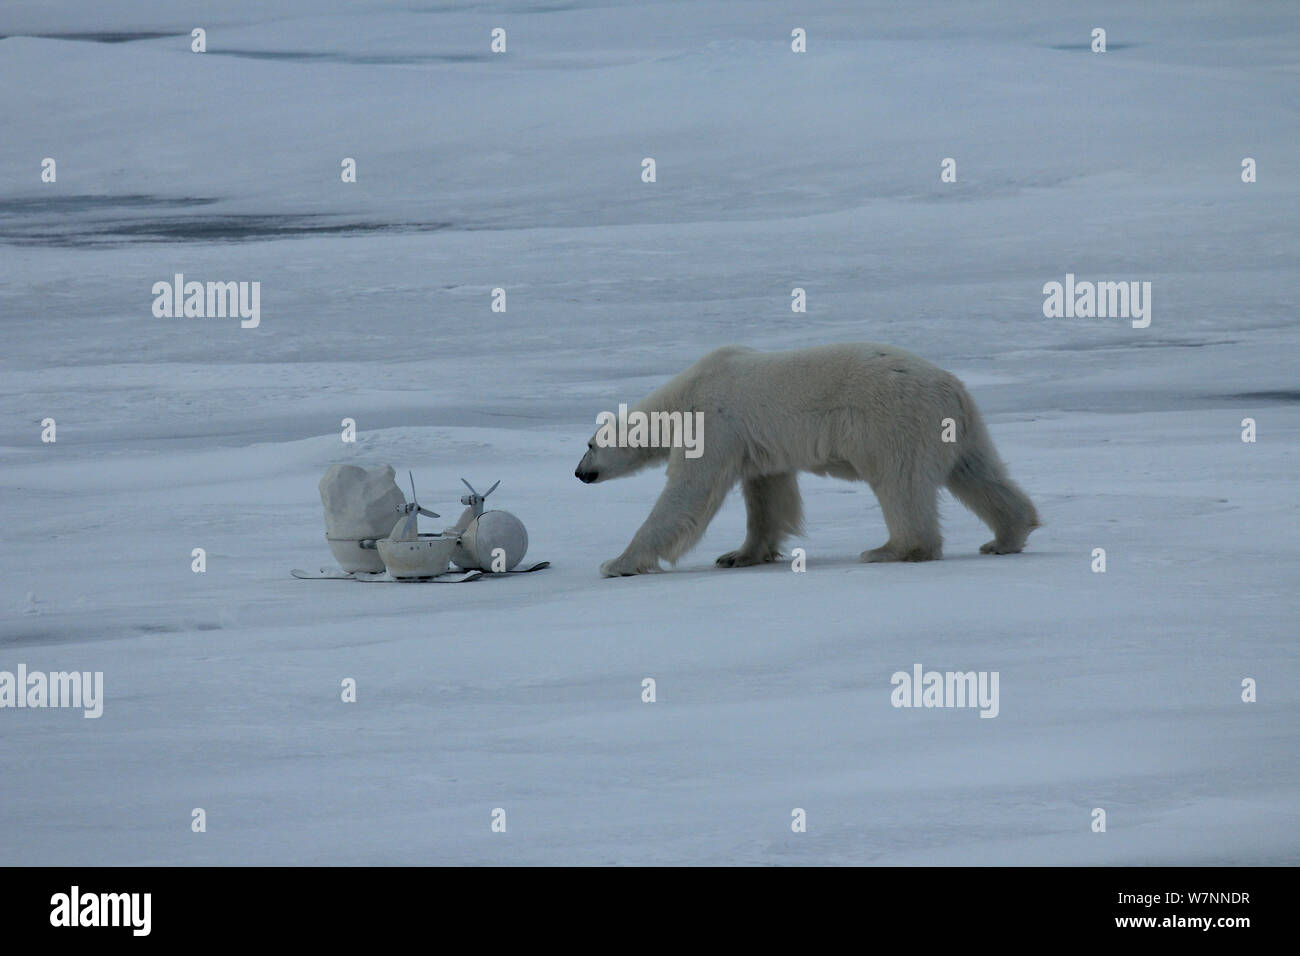 Polar bear (Ursus maritimus) investigating 'Blizzard cam' remote camera for filming polar bears, Svalbard, Norway, taken on location for 'Polar Bear : Spy on the Ice' August 2010 Stock Photo